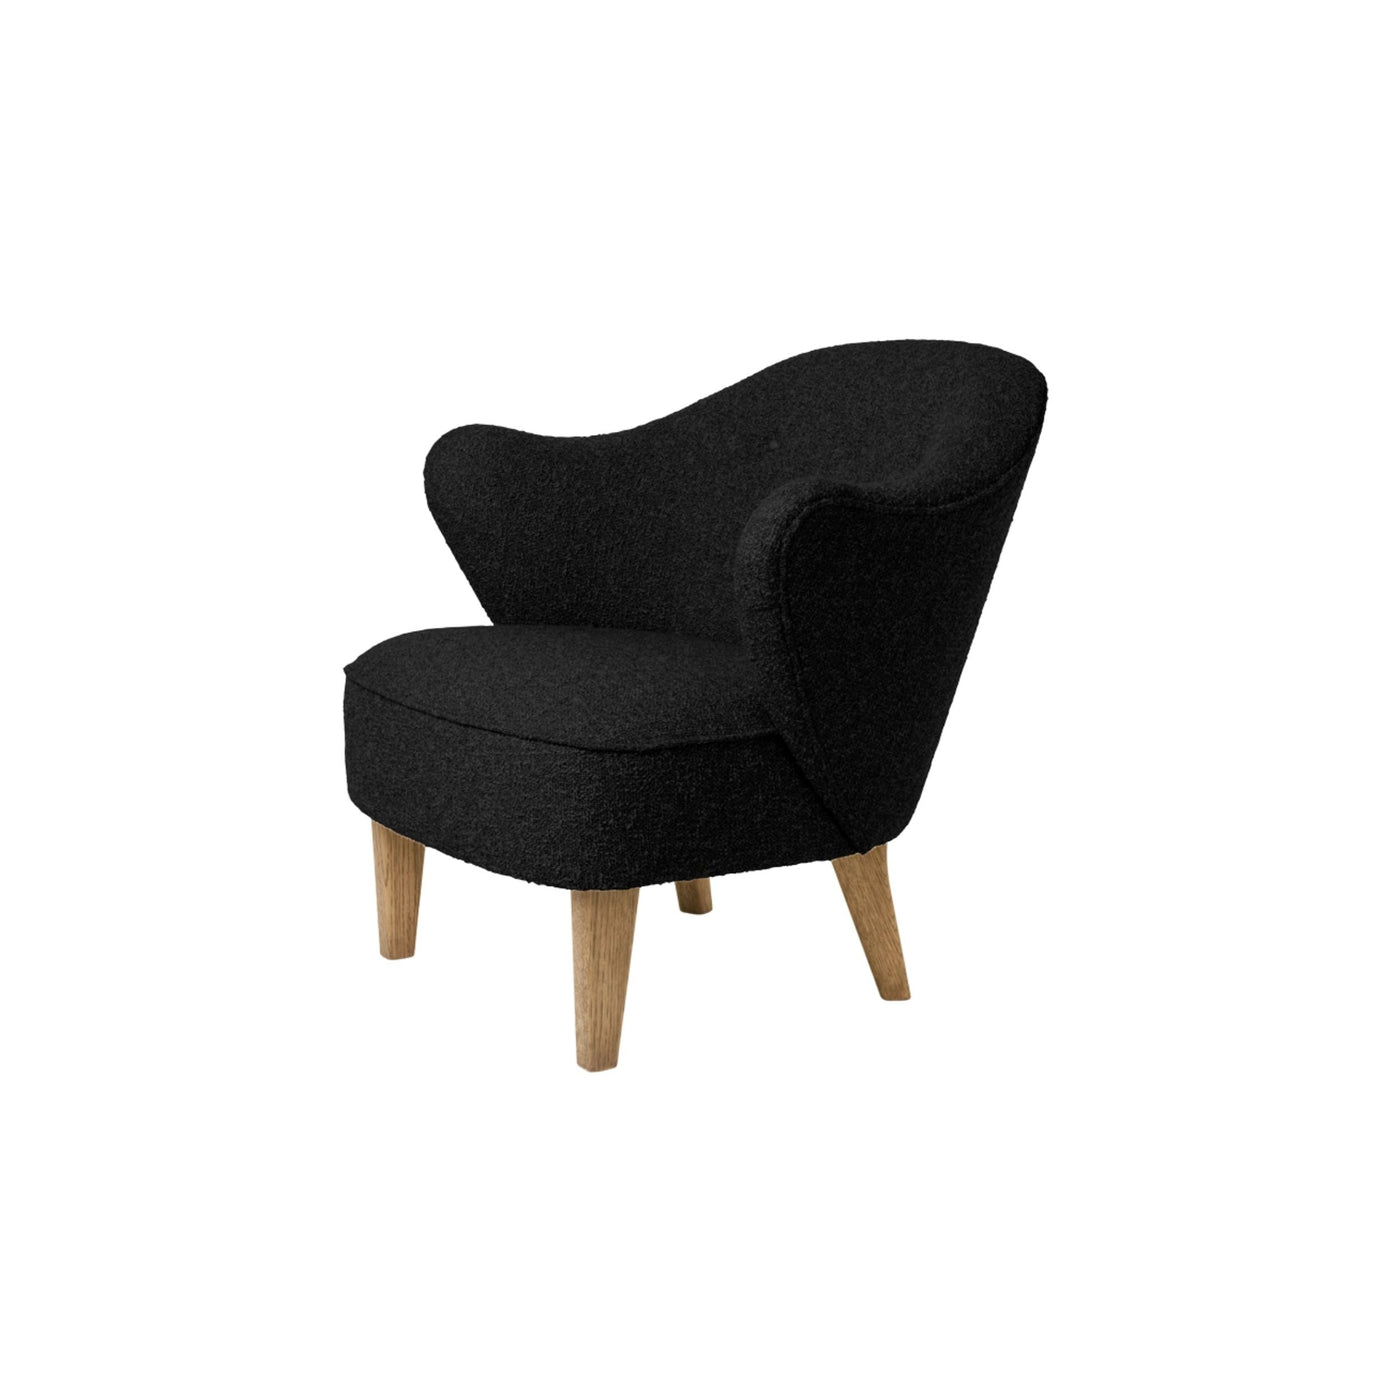 audo Ingeborg armchair. Made to order from someday designs #colour_vidar-182